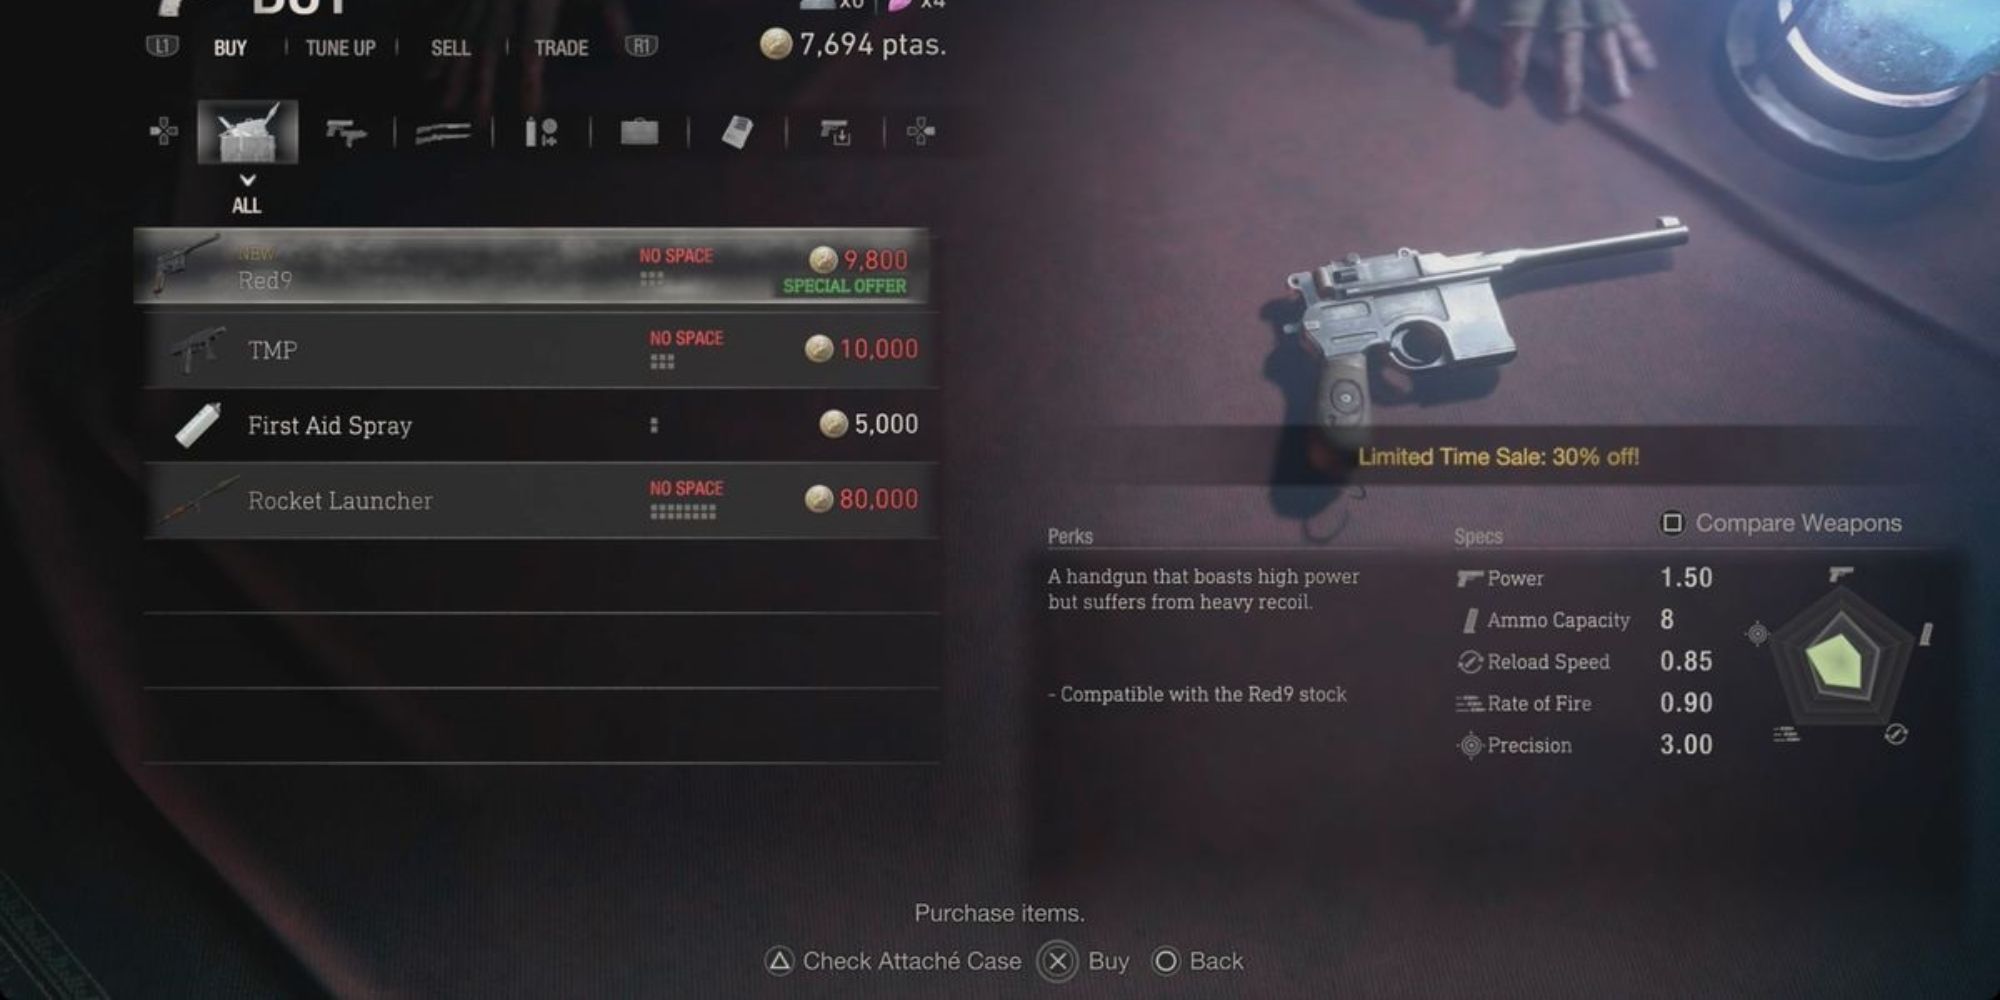 capcom re4 remake red9 handgun being upgraded at merchant